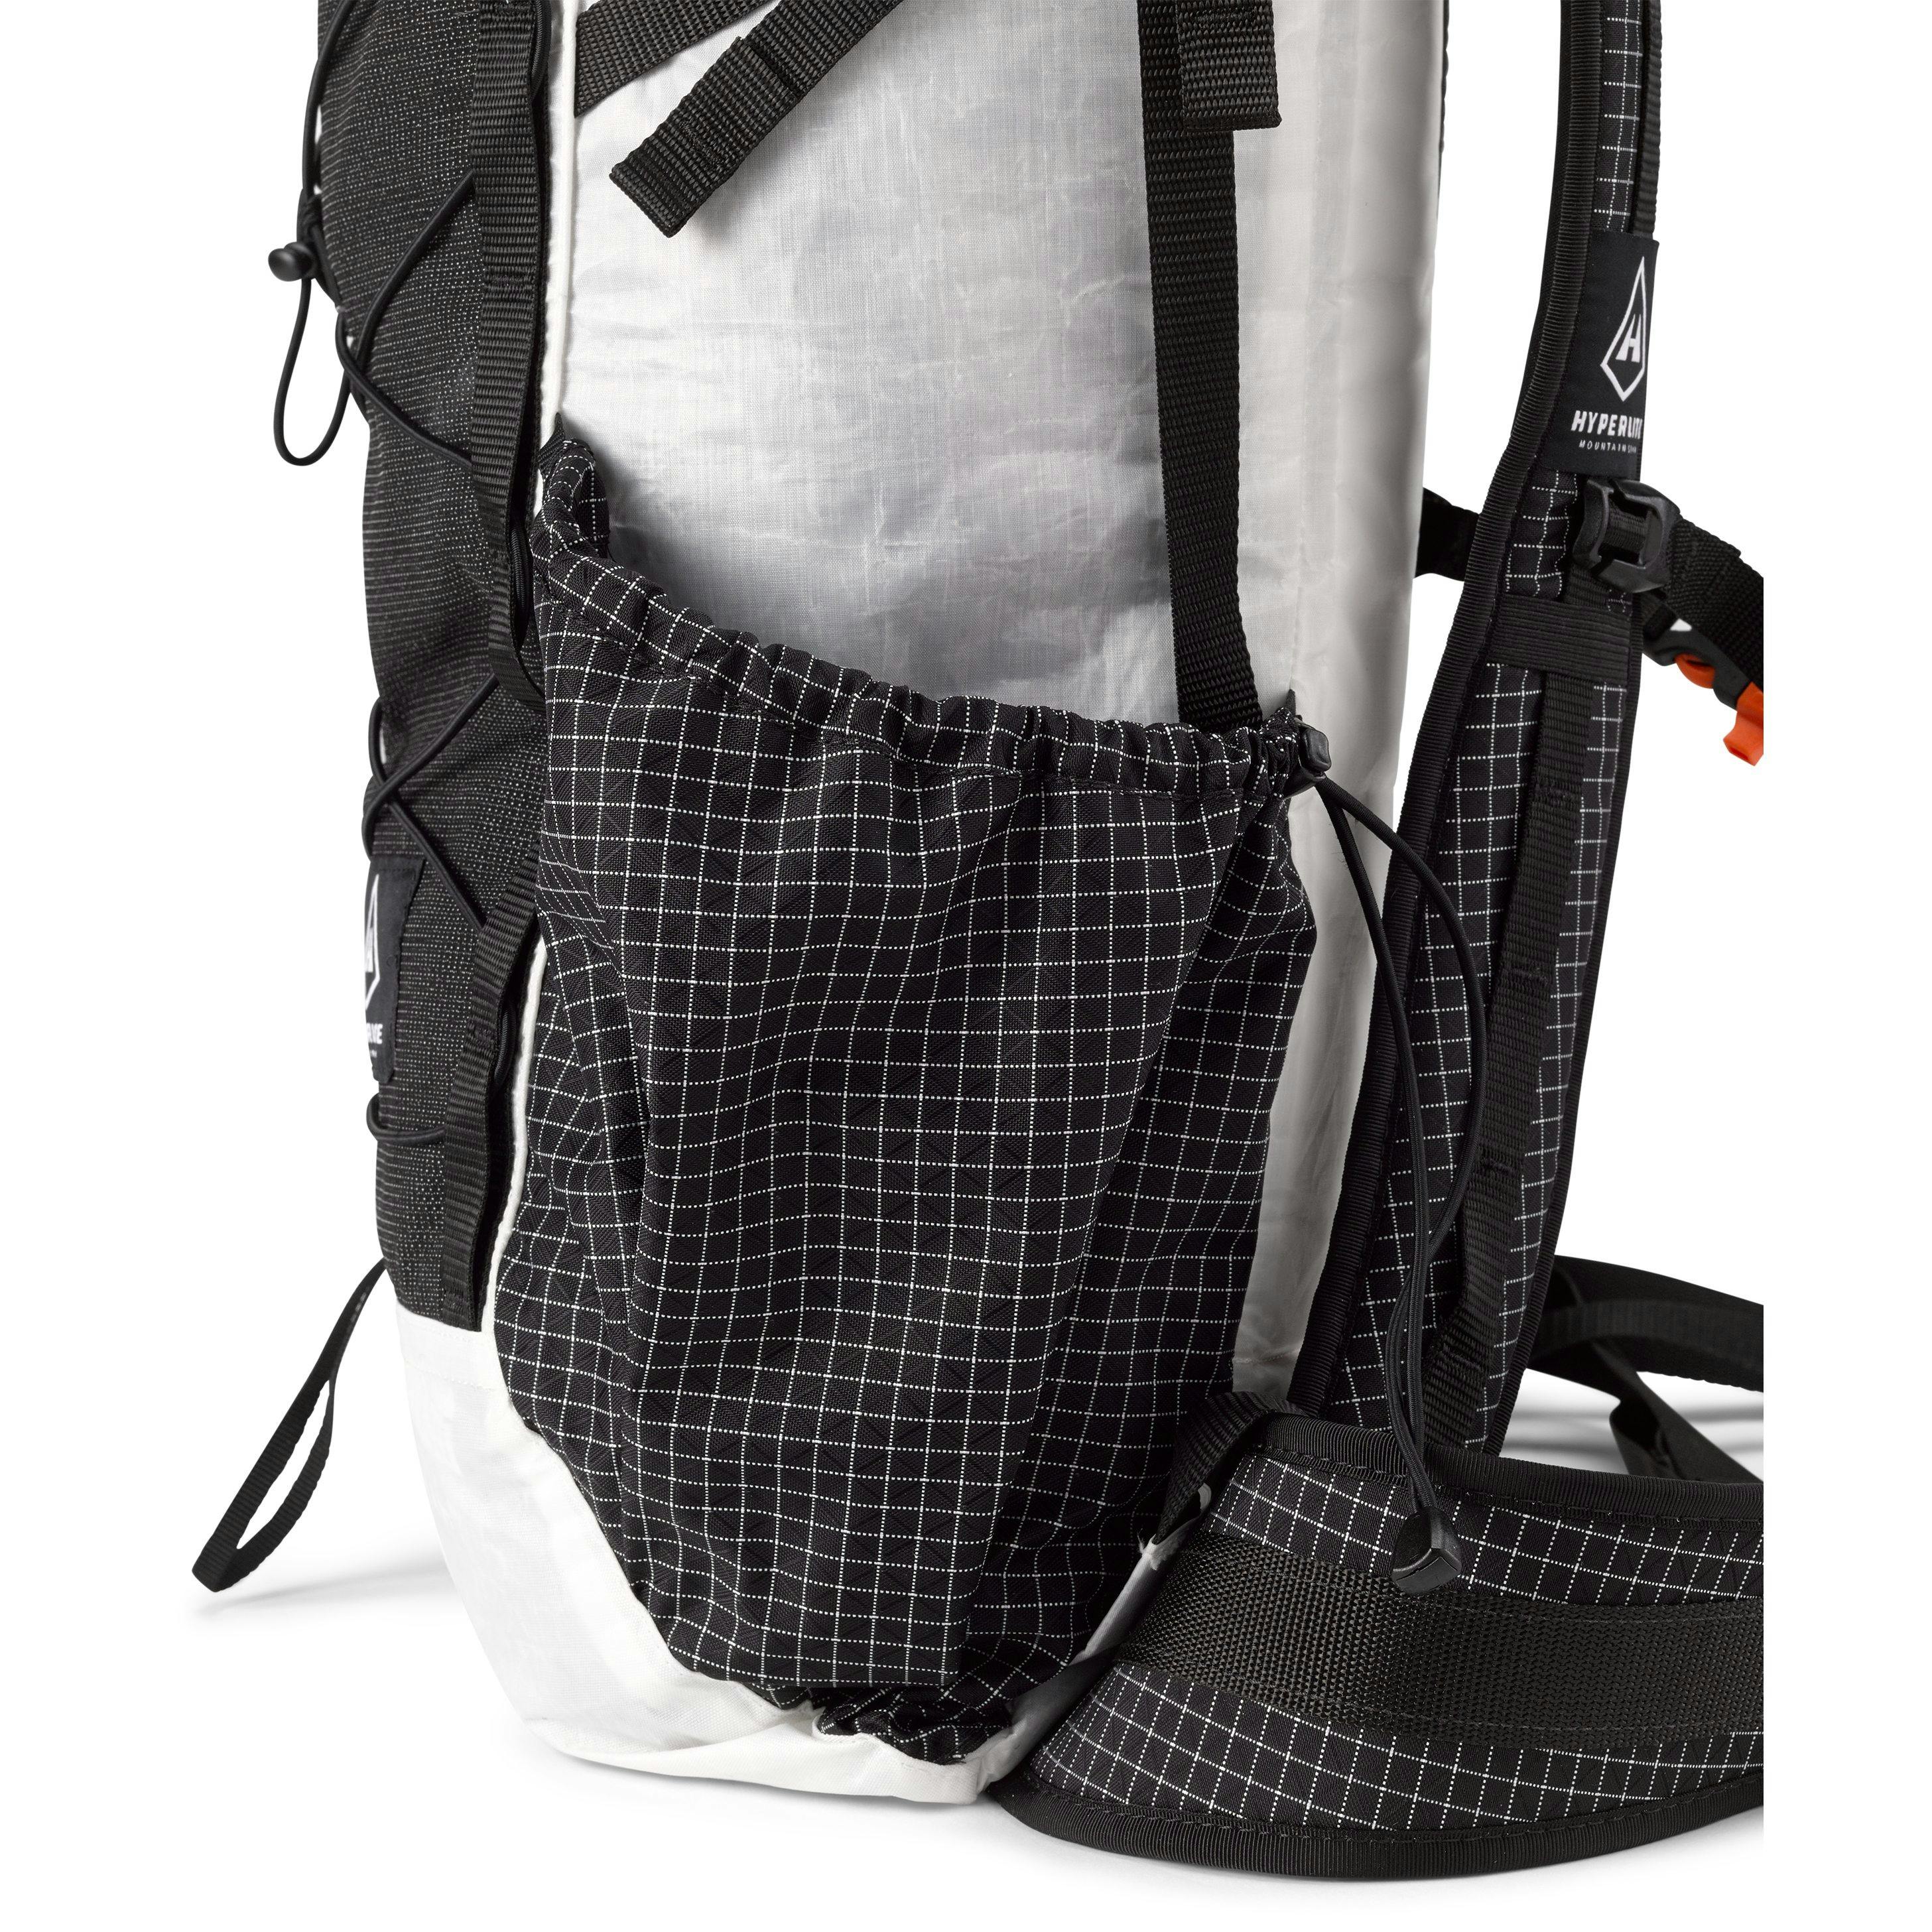 Hyperlite Mountain Gear Elevate Ultralight Dyneema Hiking Backpack - 22L -  White Dyneema, Backpacks